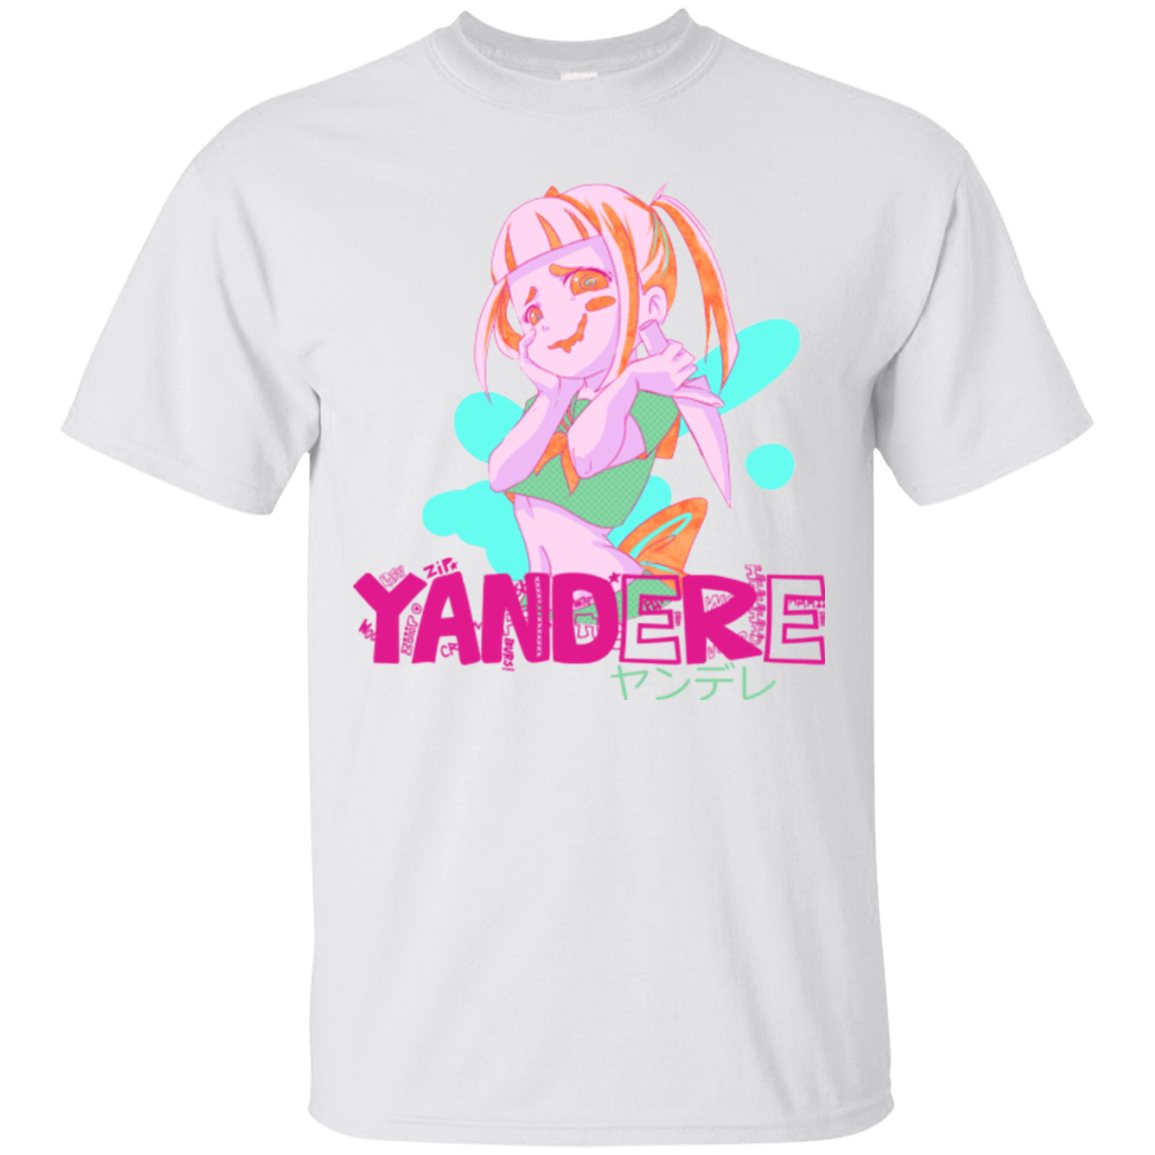 T-Shirts White / Small Yandere T-Shirt